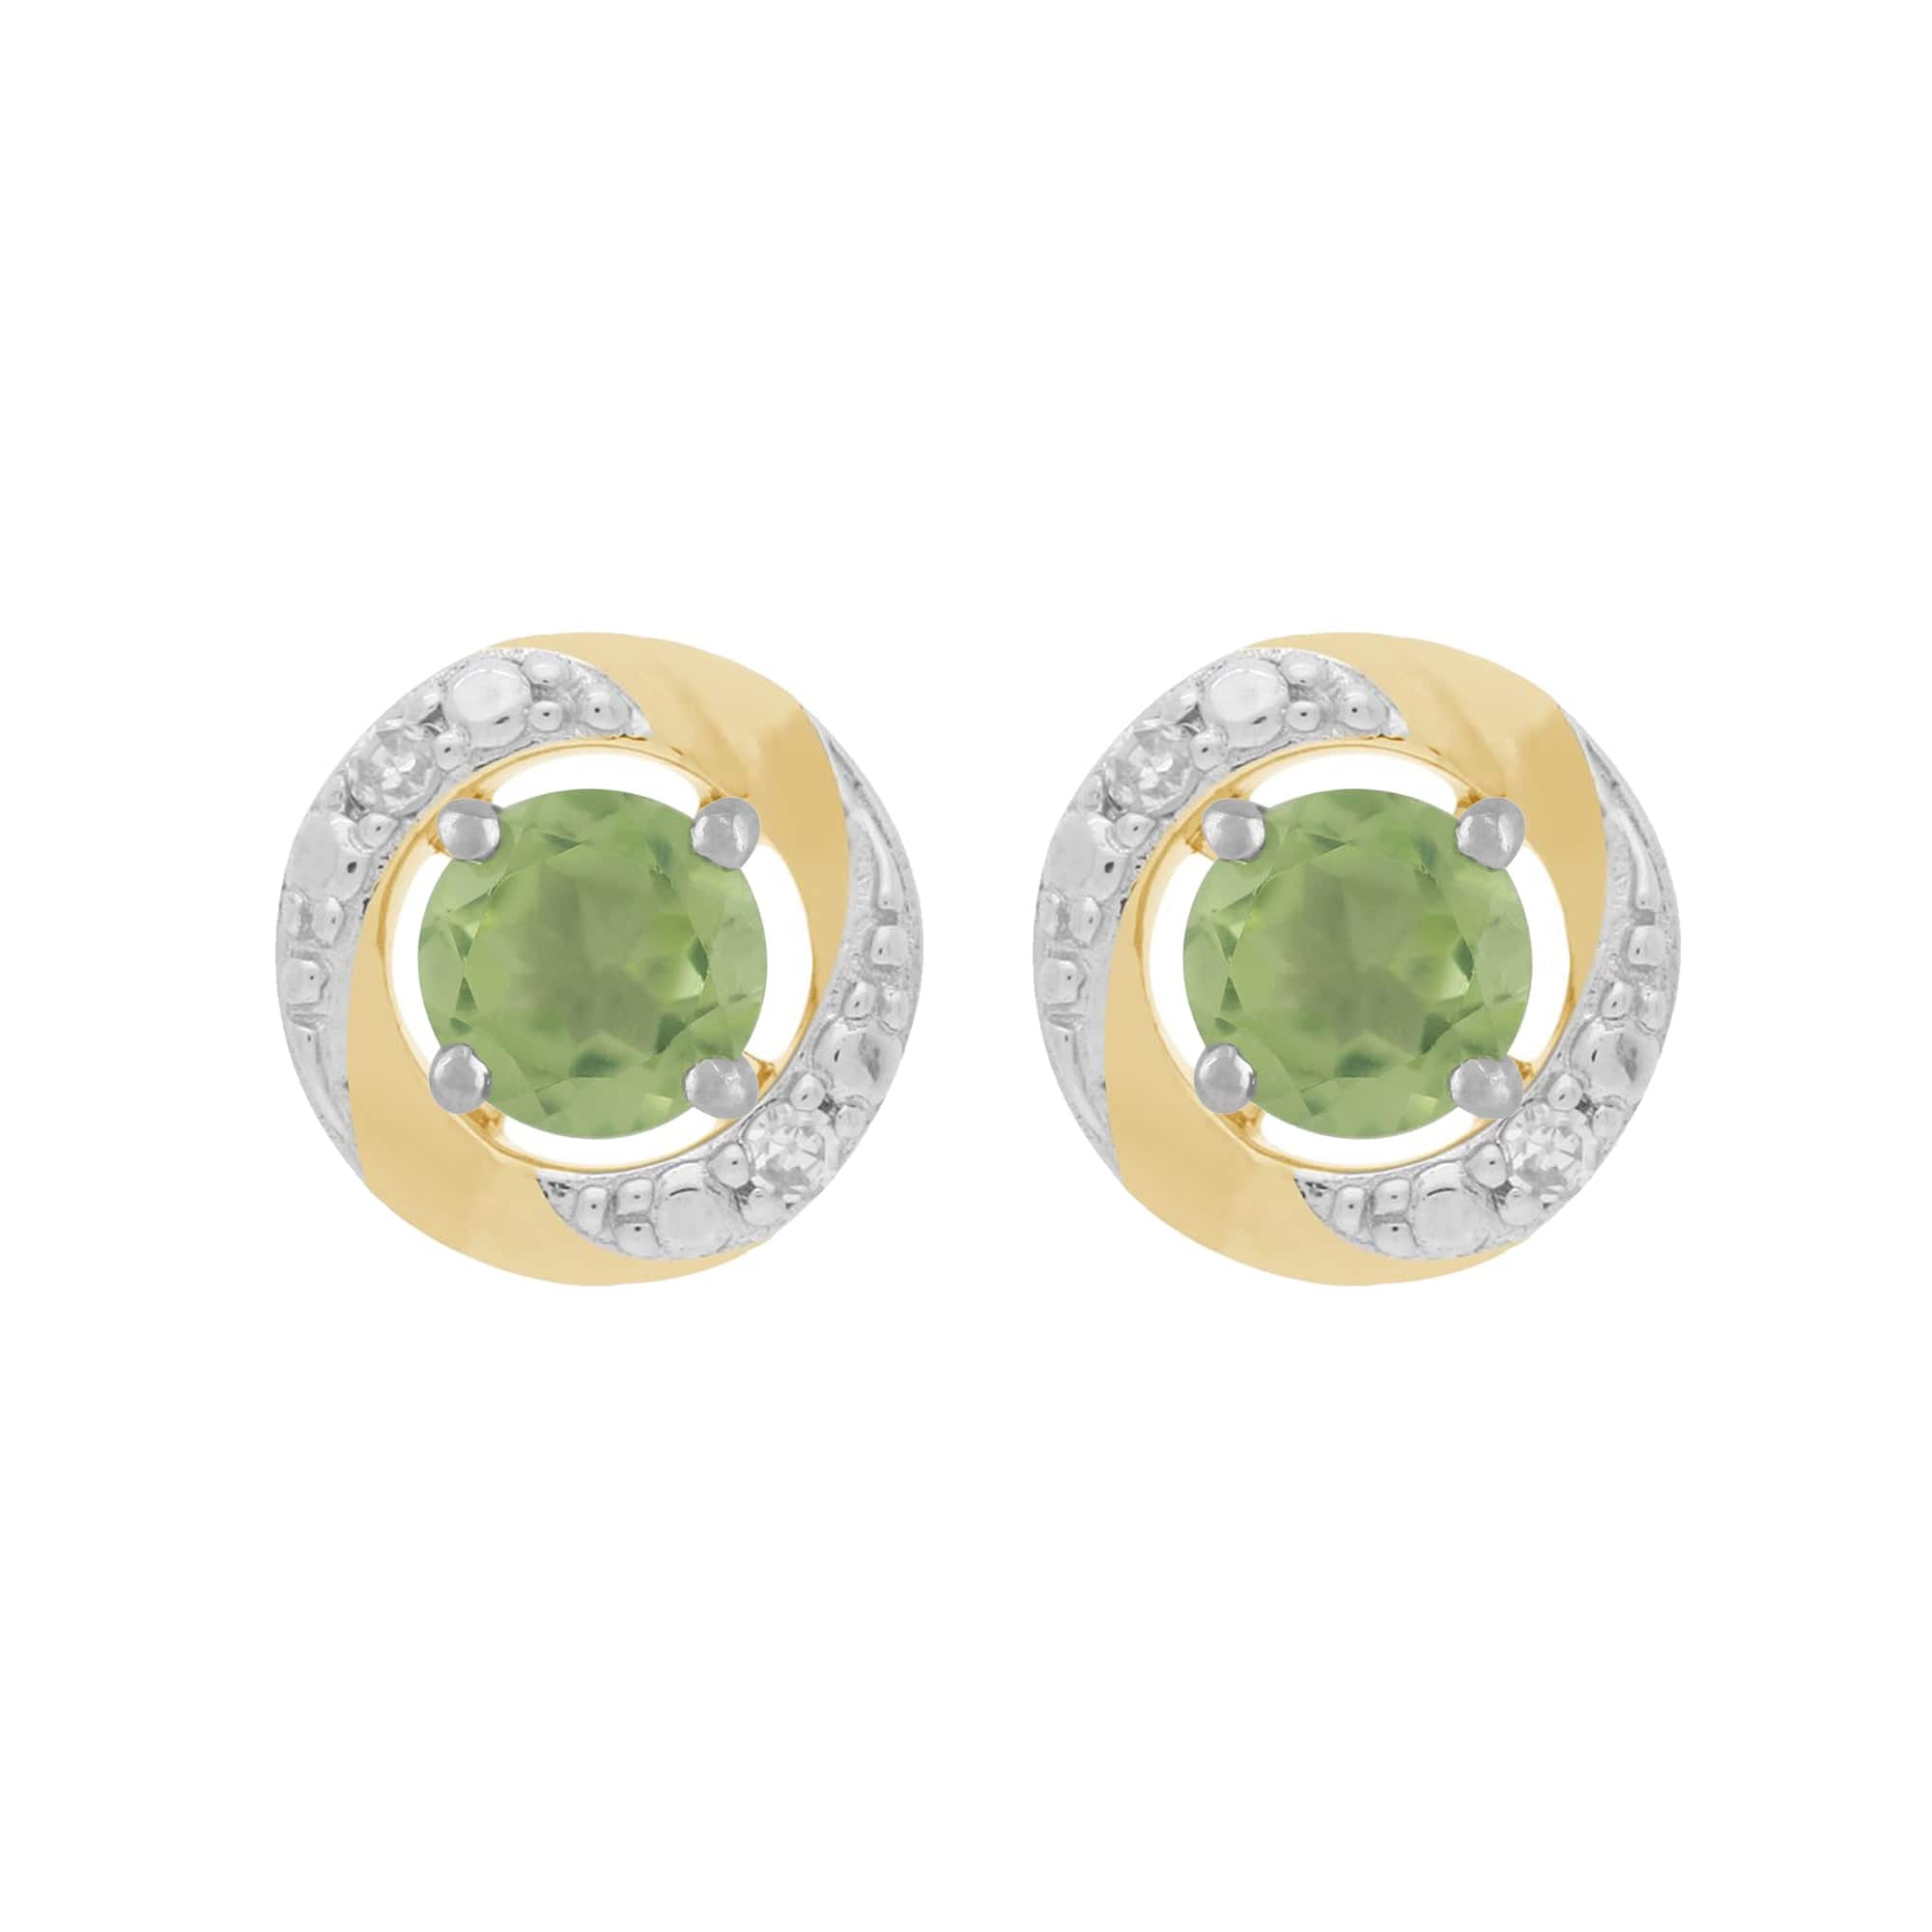 9ct White Gold Peridot Stud Earrings & Diamond Halo Ear Jacket Image 1 